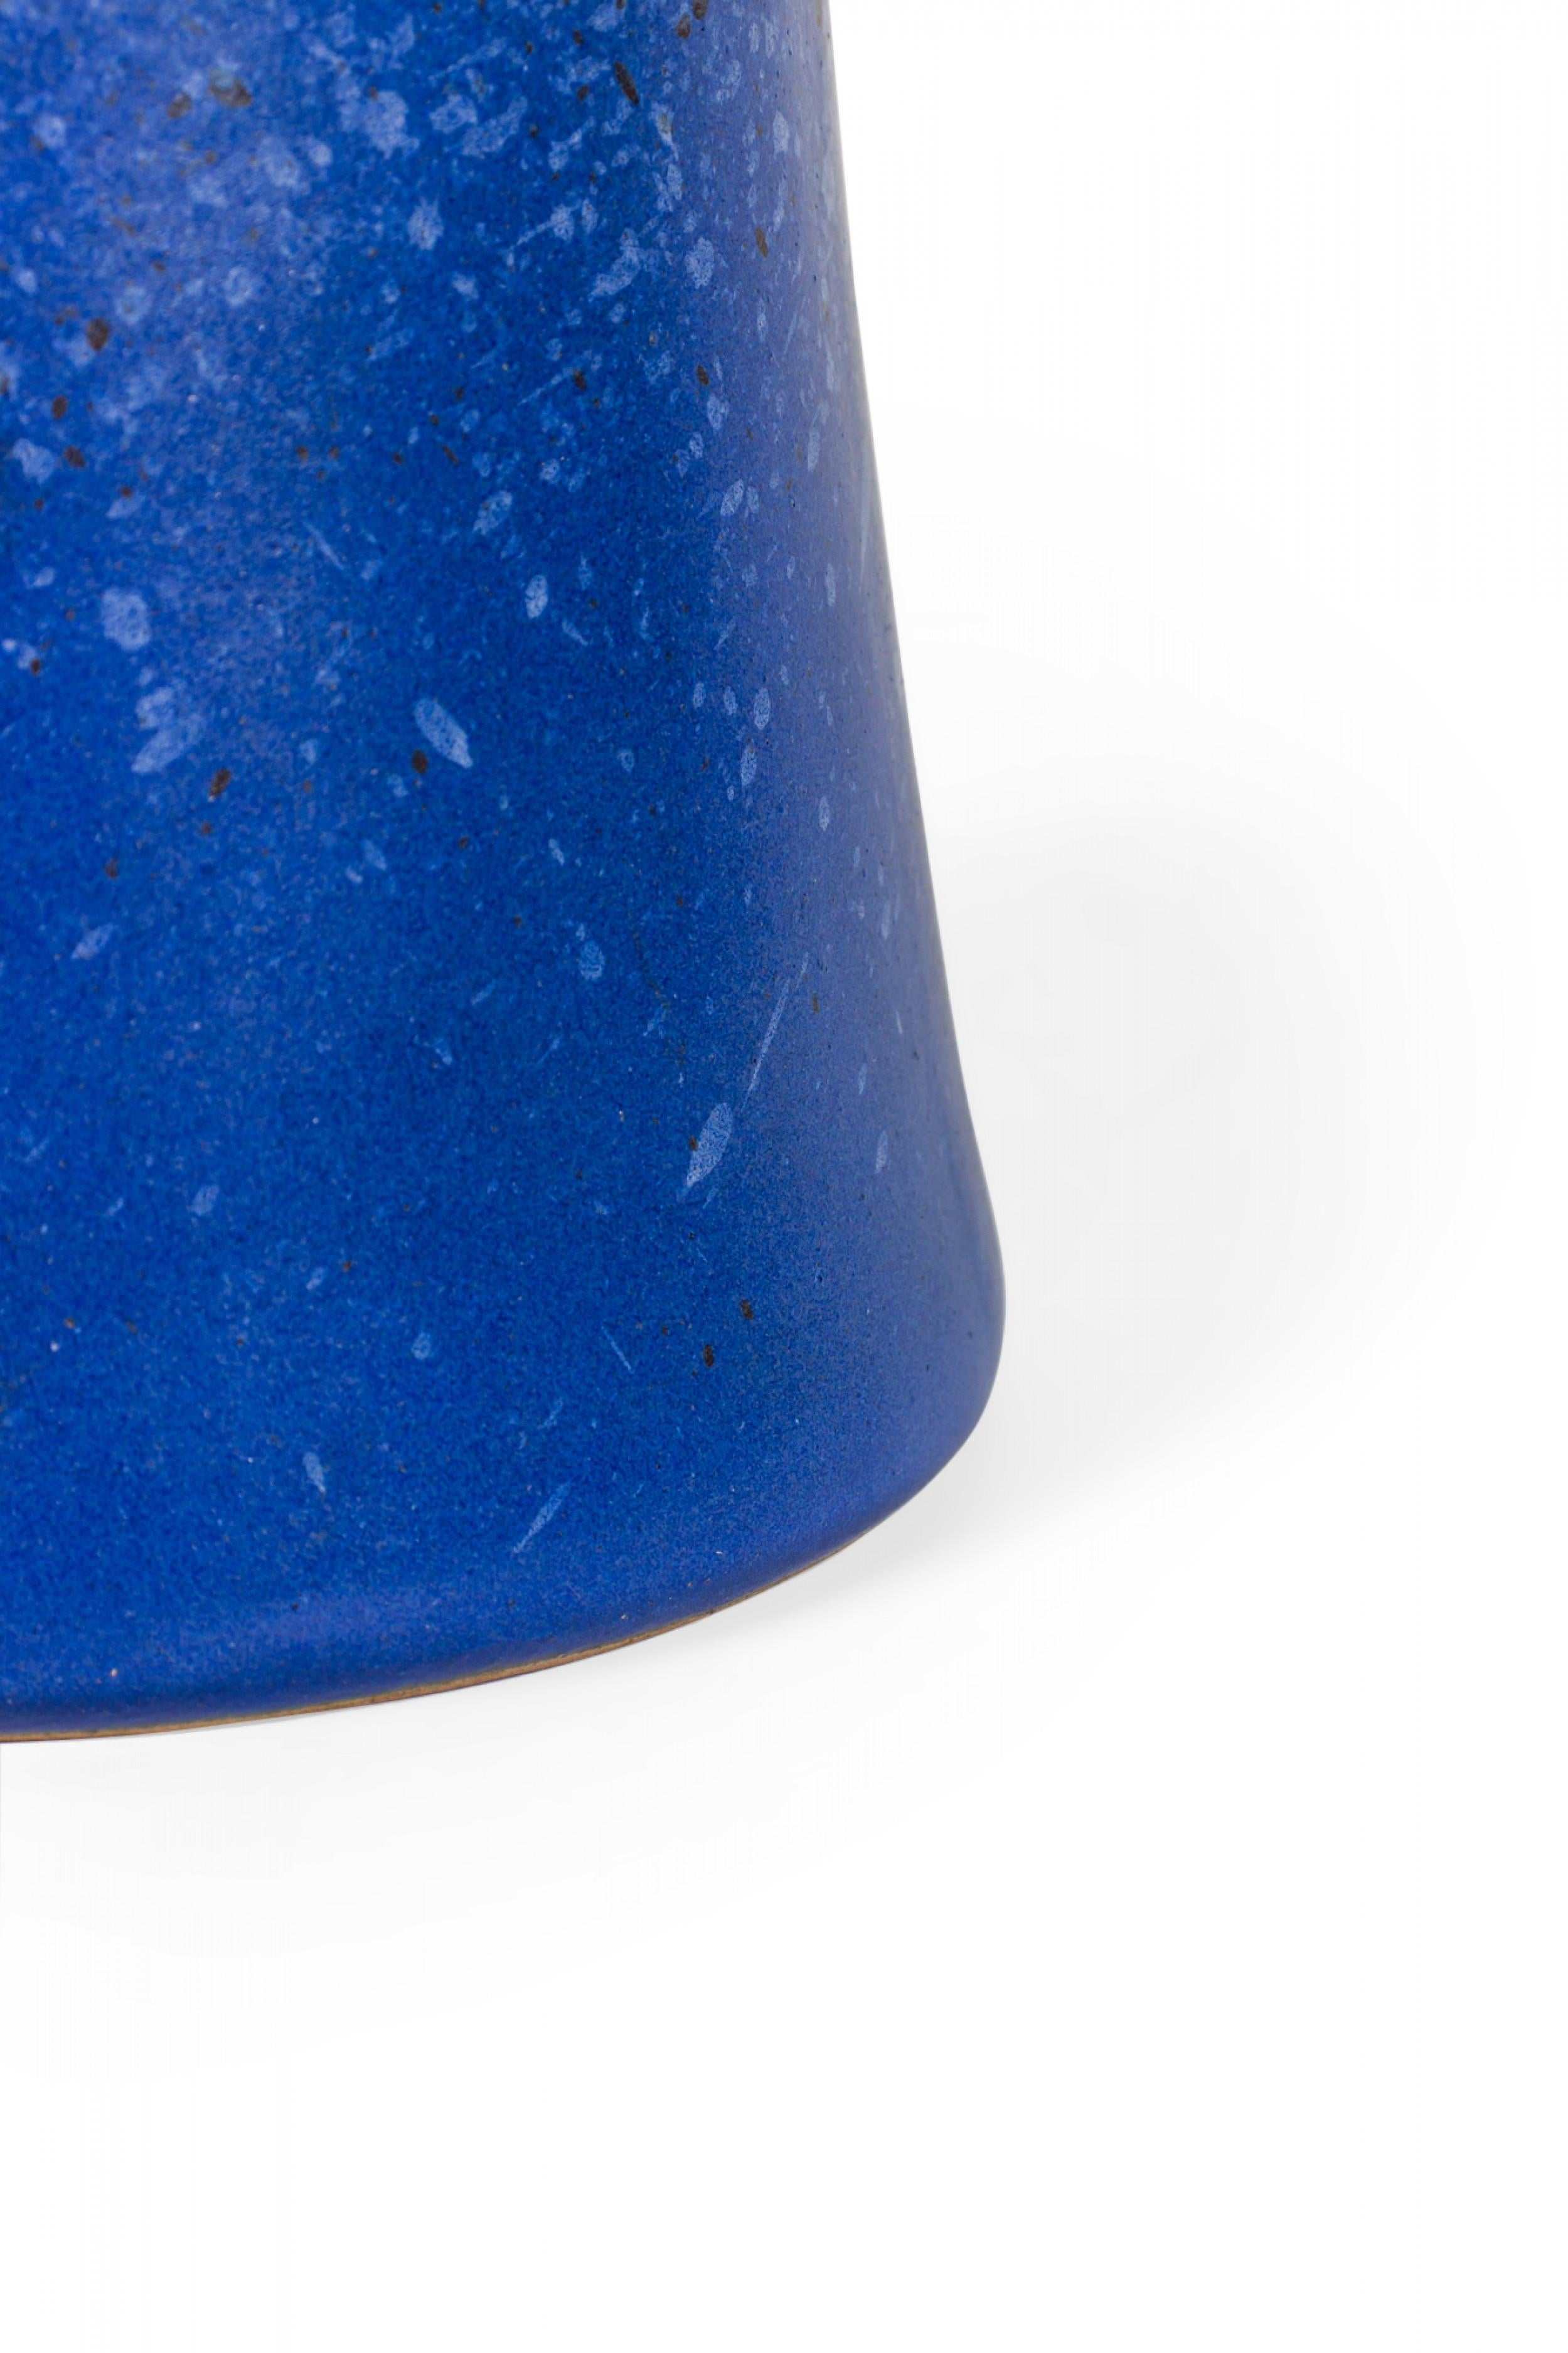 Mid-Century Modern Strehla Keramik East German Mid-Century Speckled Blue Glazed Ceramic Bottle Vase For Sale